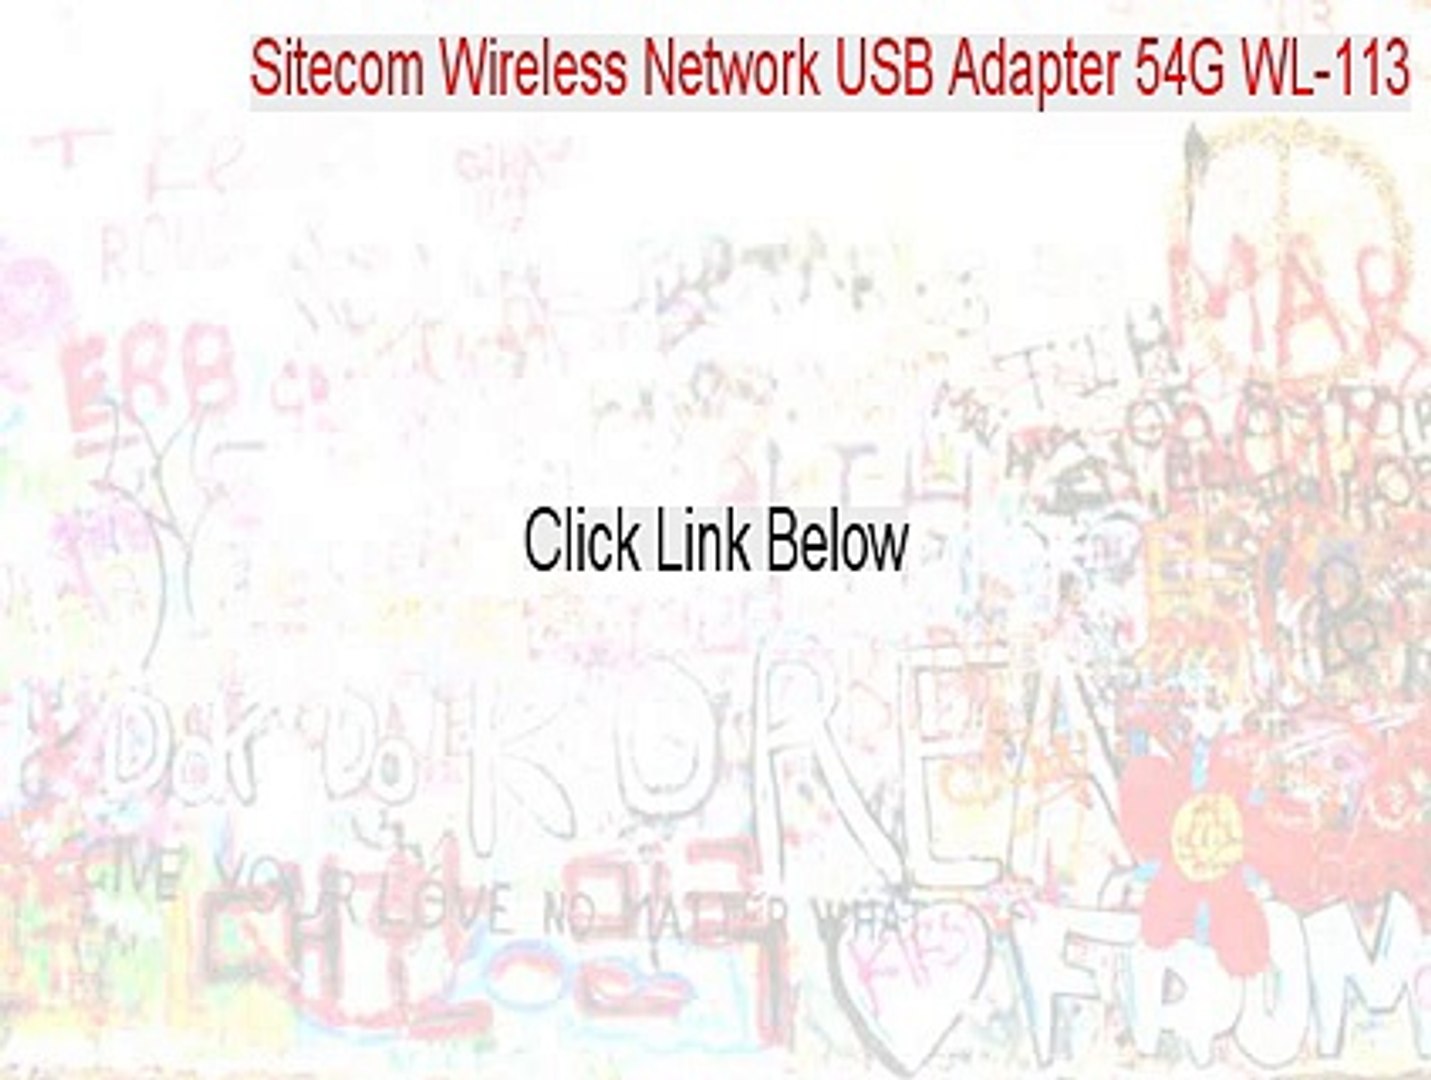 Sitecom Wireless Network USB Adapter 54G WL-113 Full - driver sitecom  wireless network usb adapter 54g wl-113_002 2015 - video Dailymotion